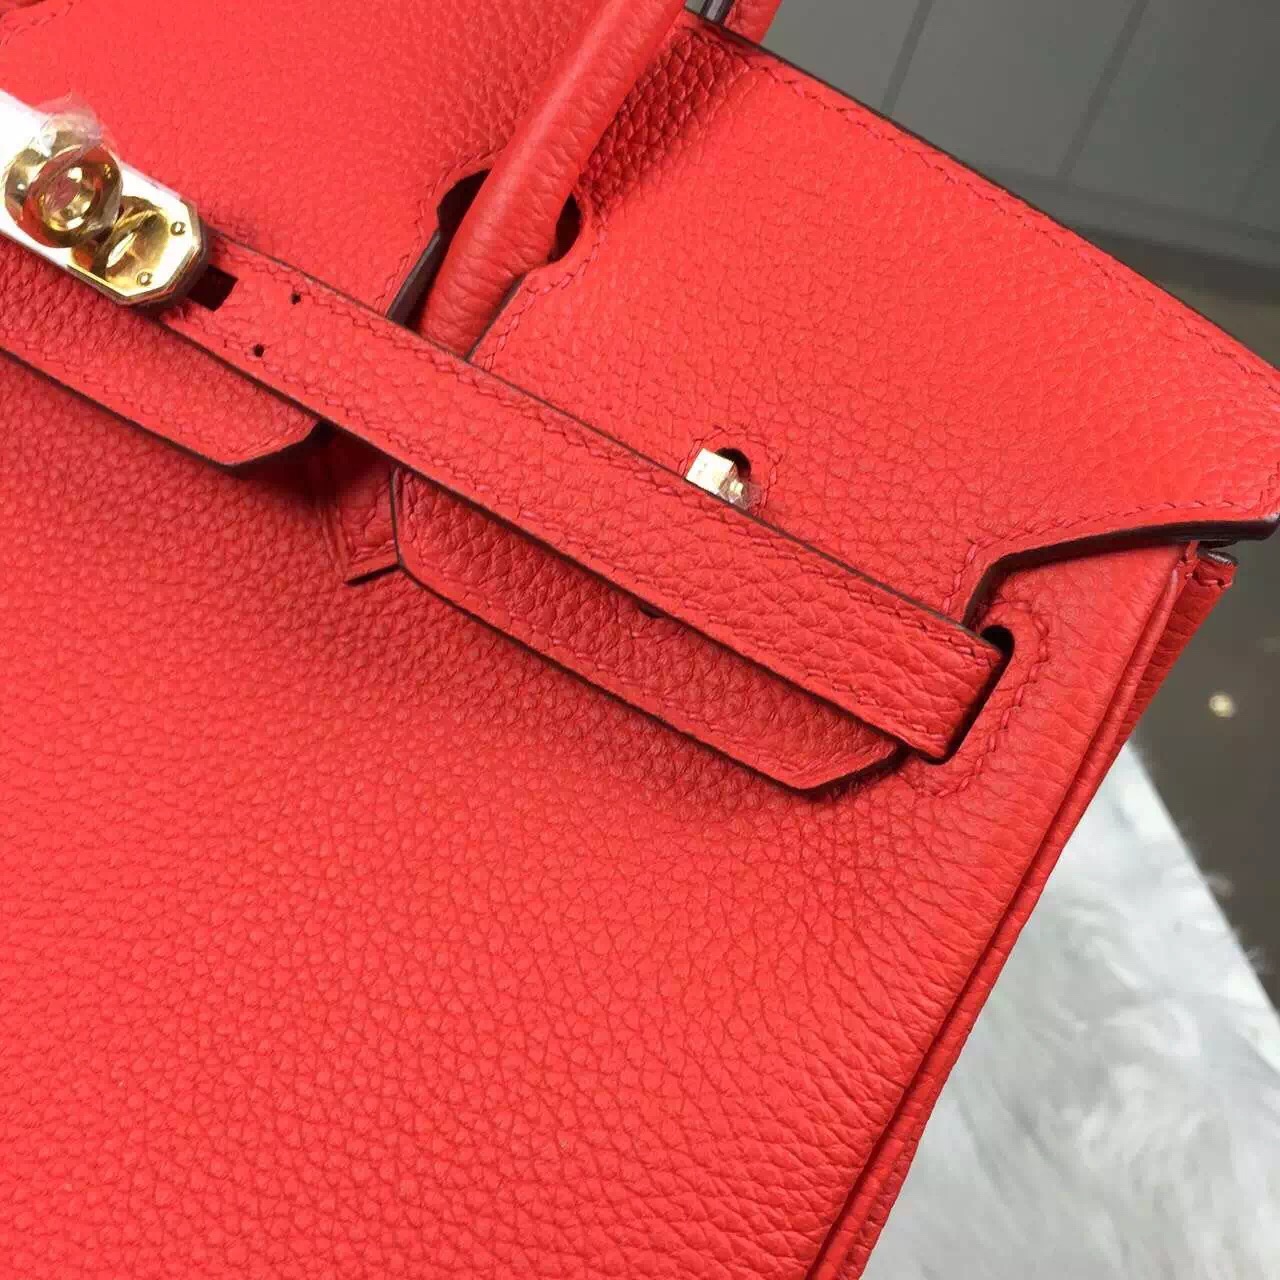 New Pretty Hermes German Calfskin Leather Birkin Bag25cm Flame Red